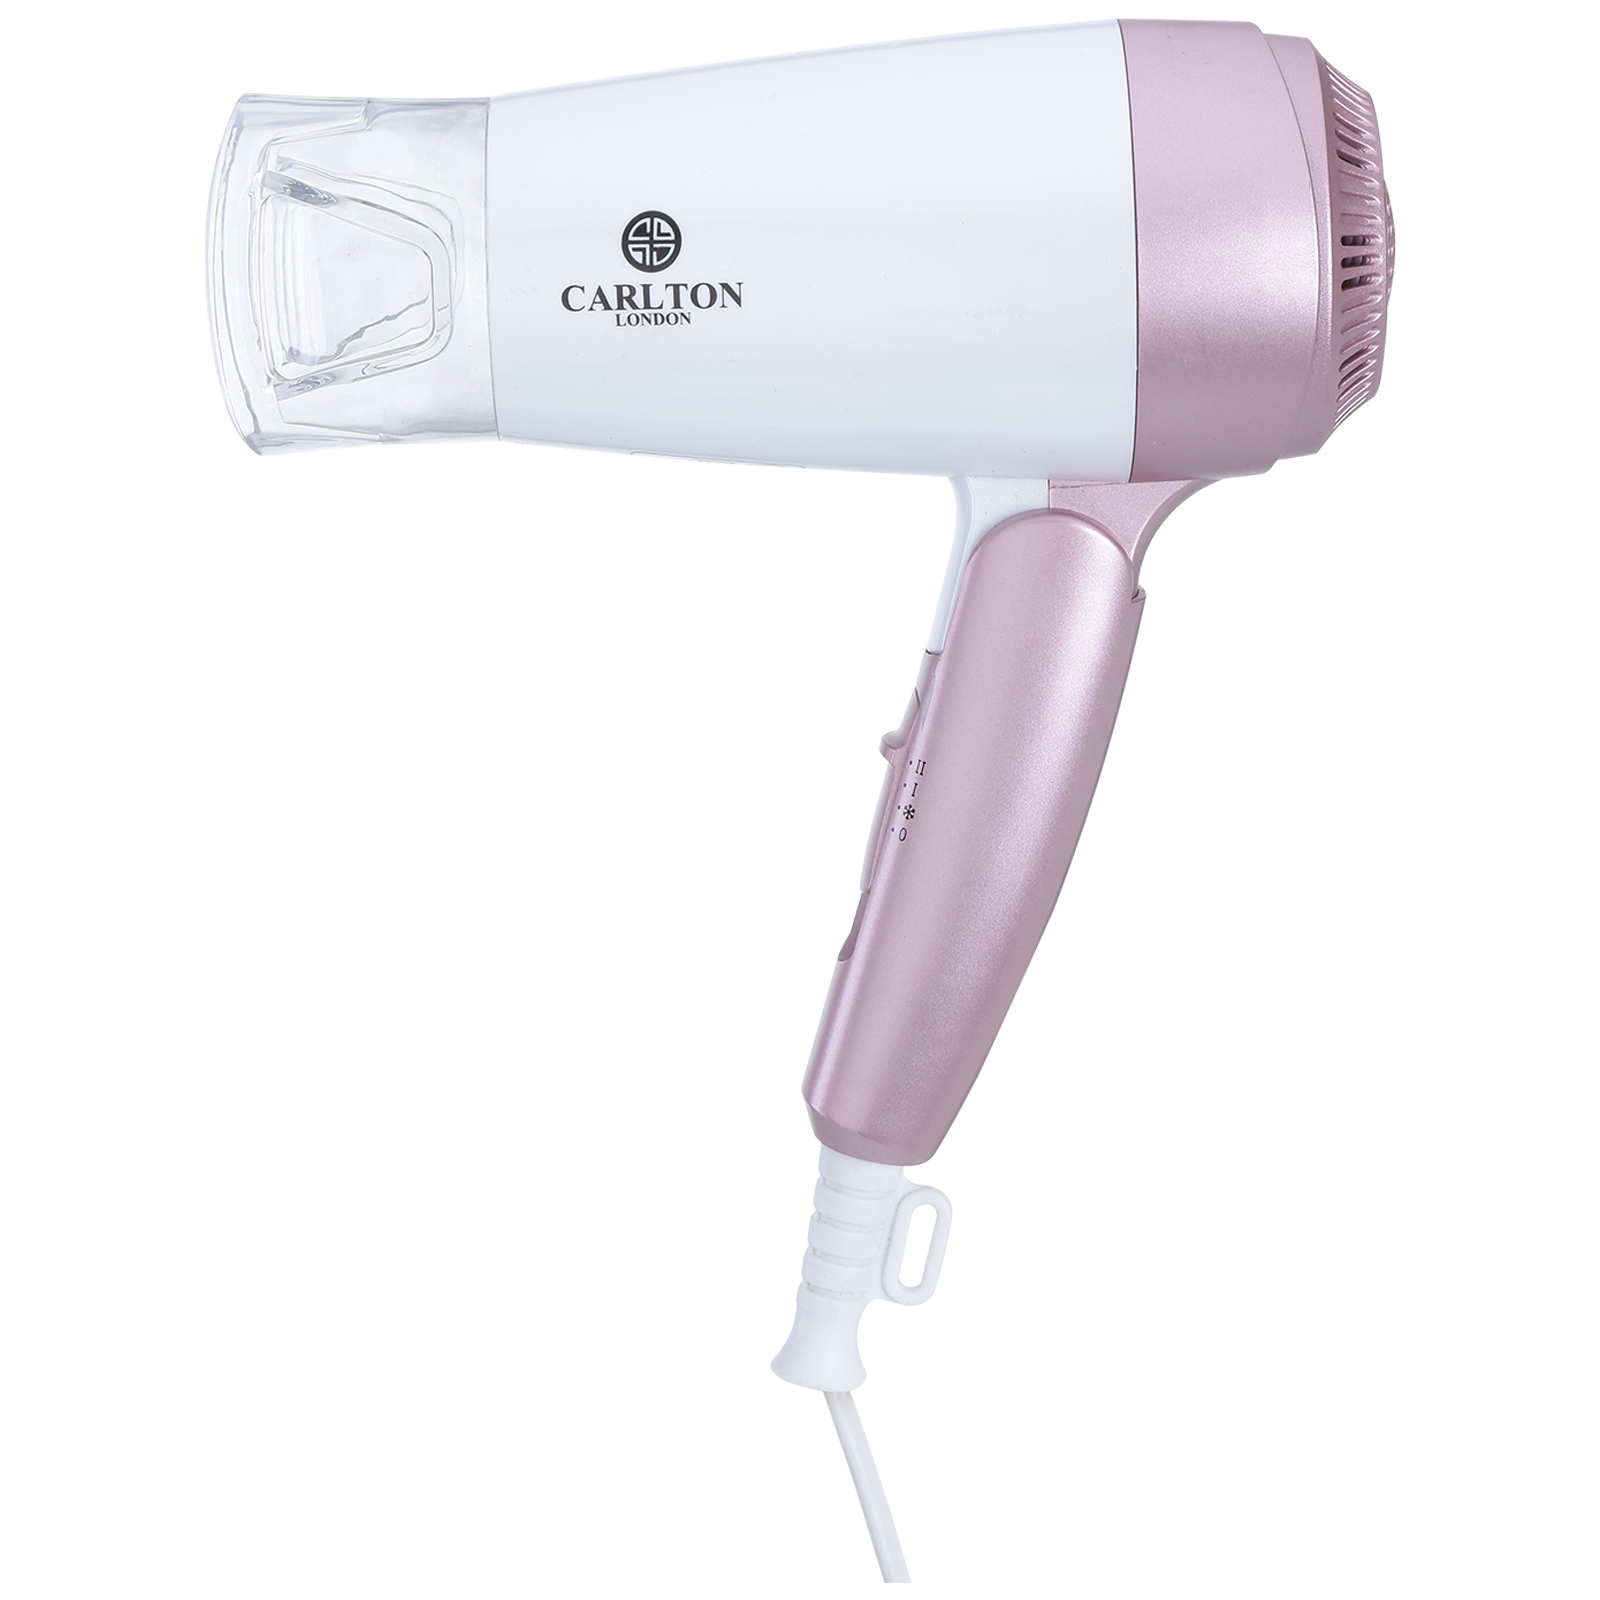 Carlton London 3 Setting Hair Dryer (Overheat Protection, CLSHCG102sHC14, White)_1